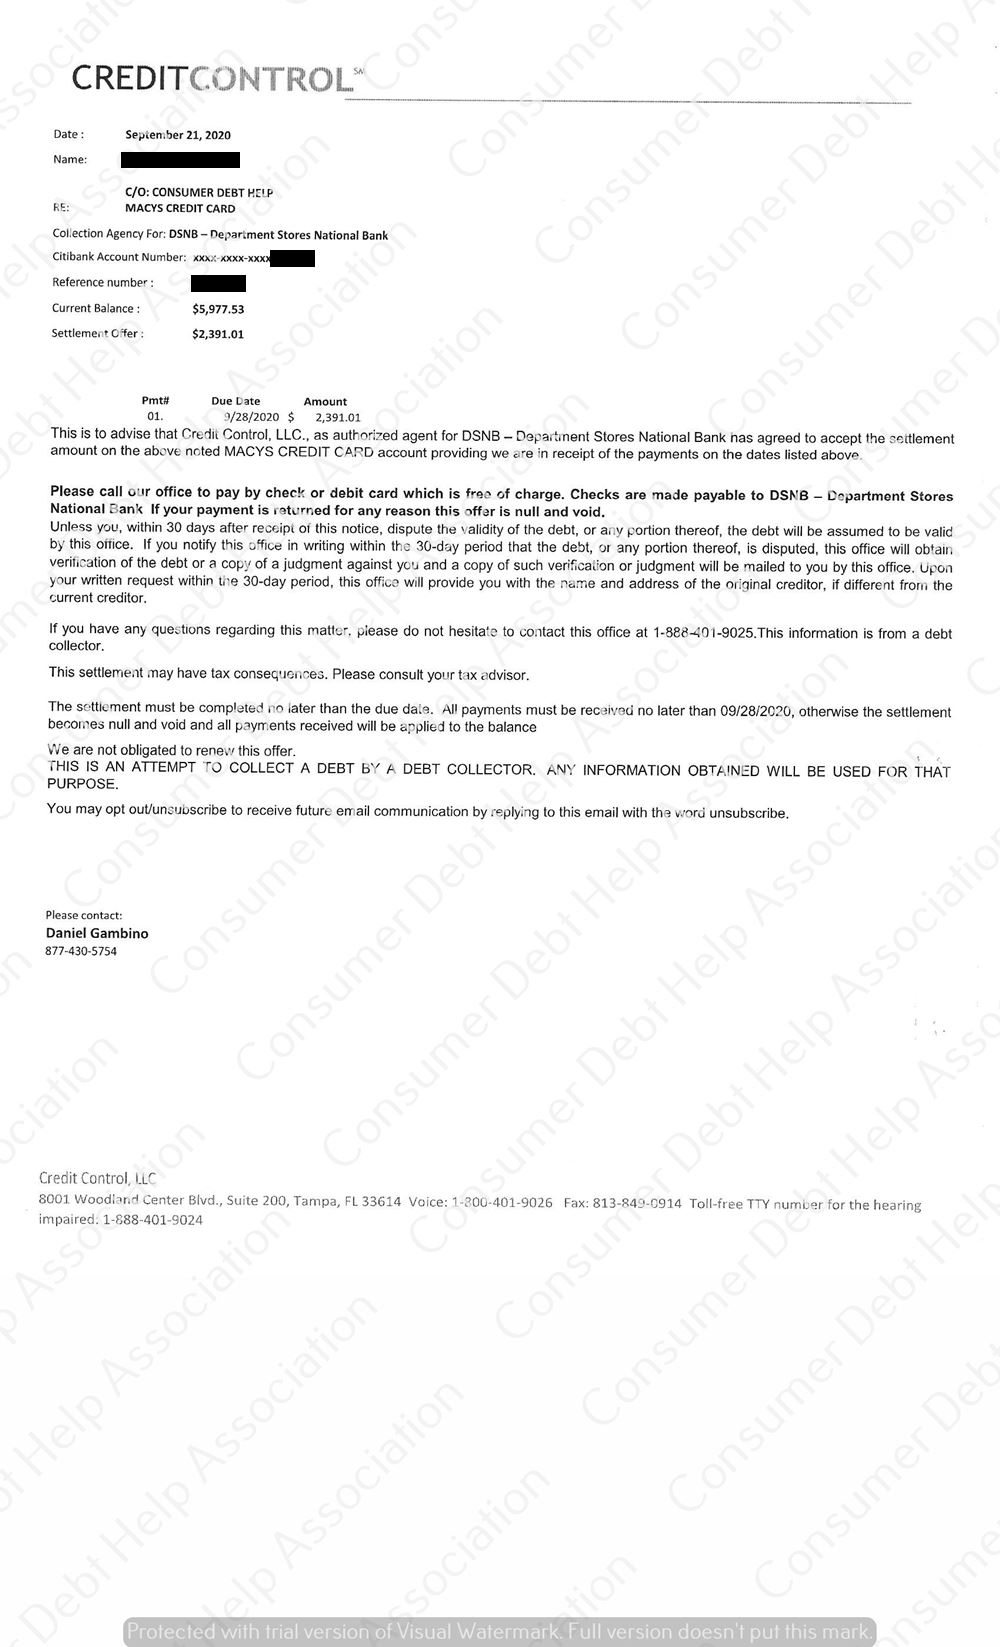 settlement-letter-from-macy-s-citibank-consumer-debt-help-association